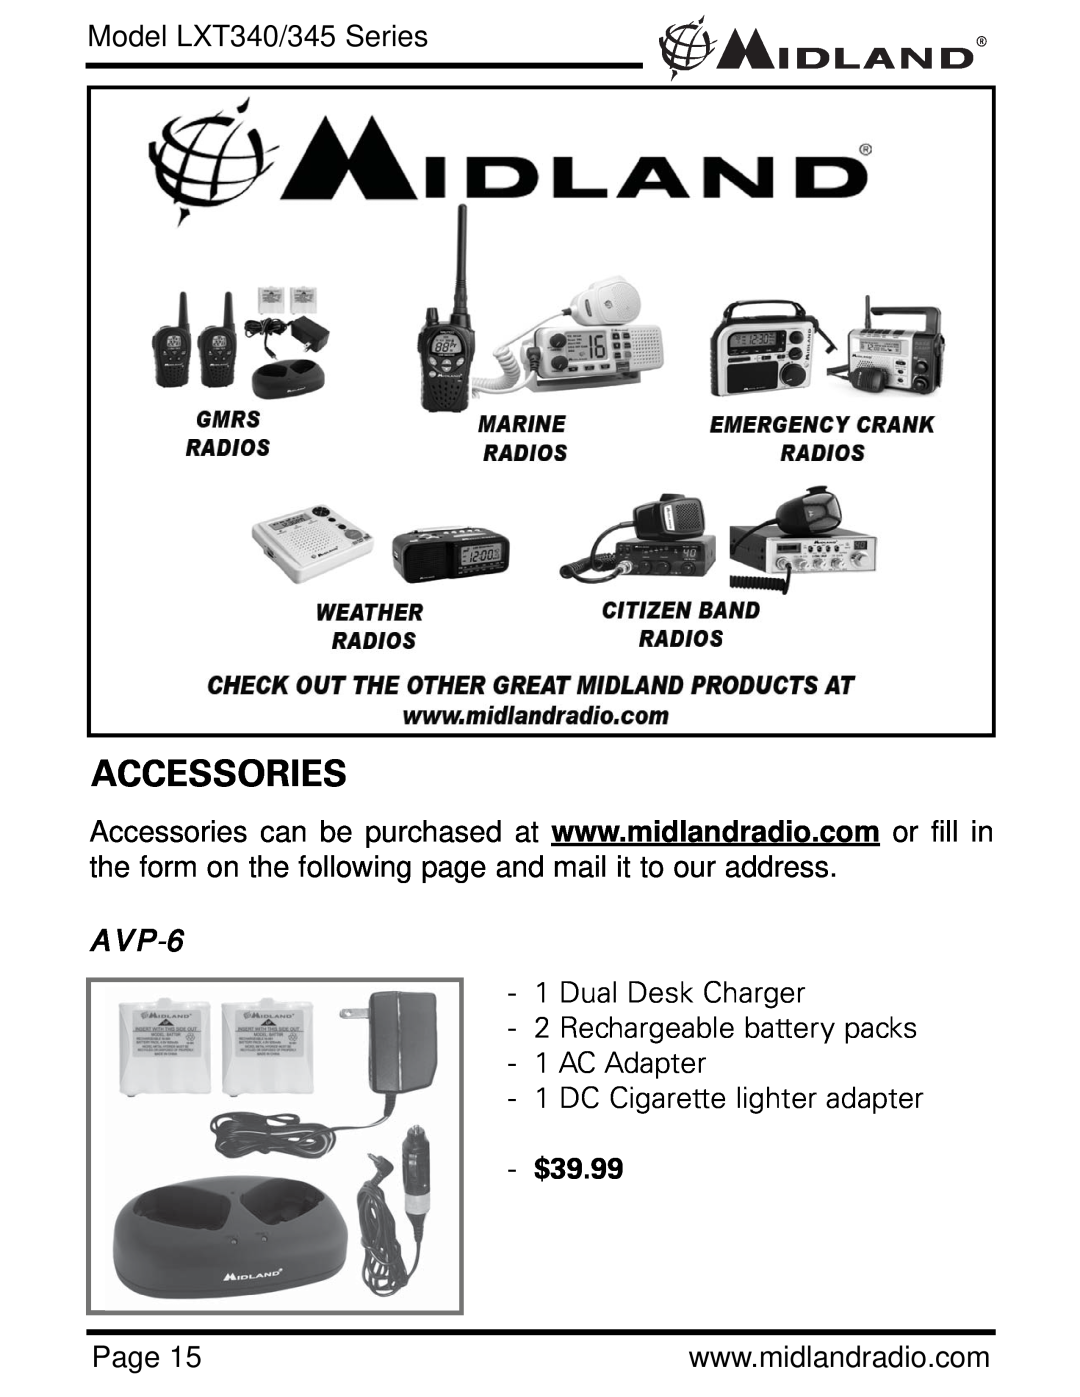 Midland Radio LXT345 Series, LXT340 Series owner manual Accessories, AVP-6, Model LXT340/345 Series, $39.99 